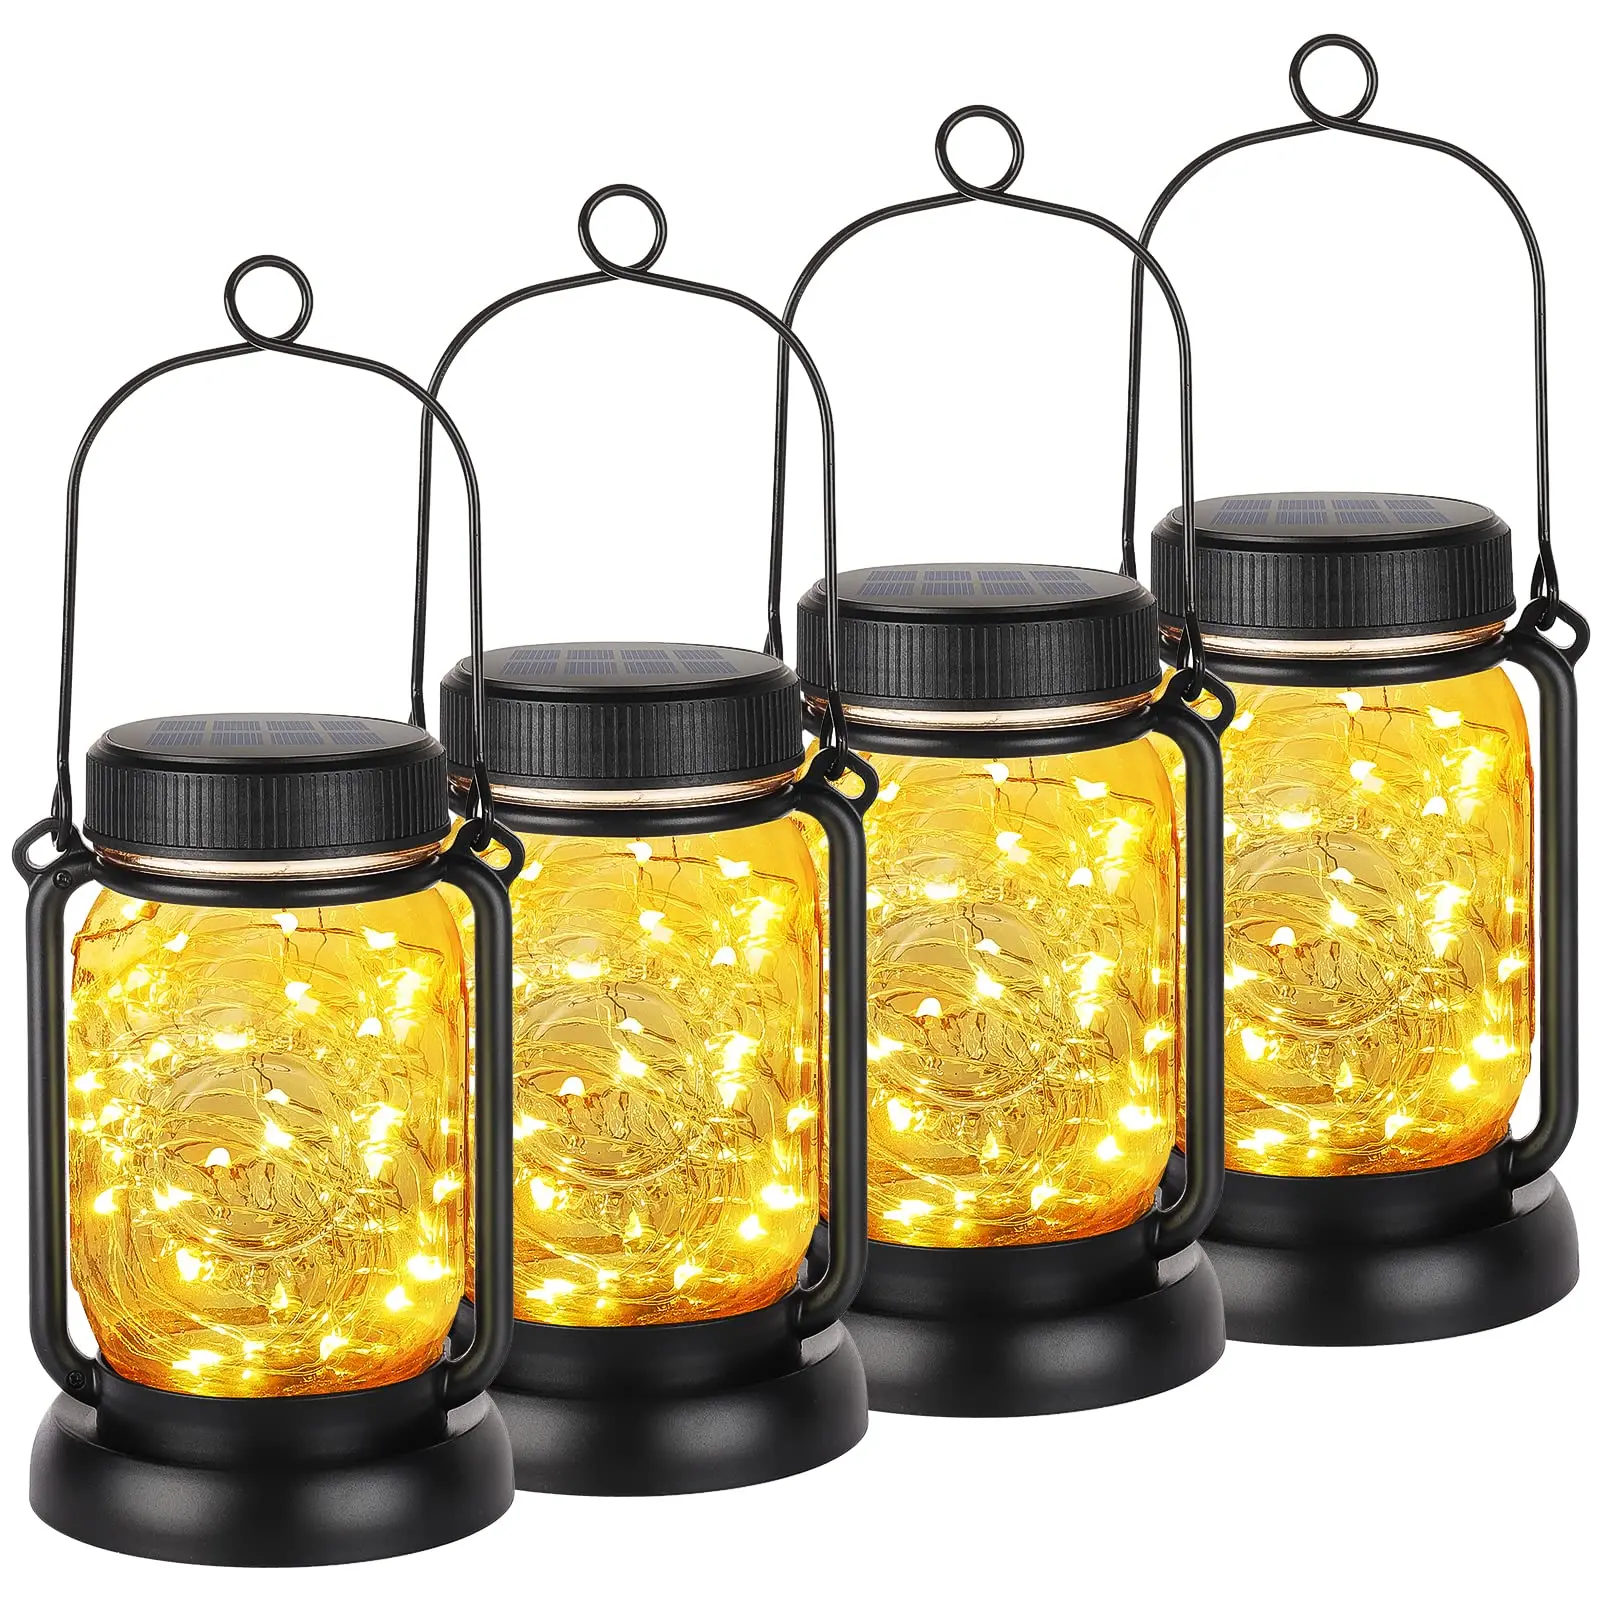 hanging jar lights with solar panel - How do solar jar lights work